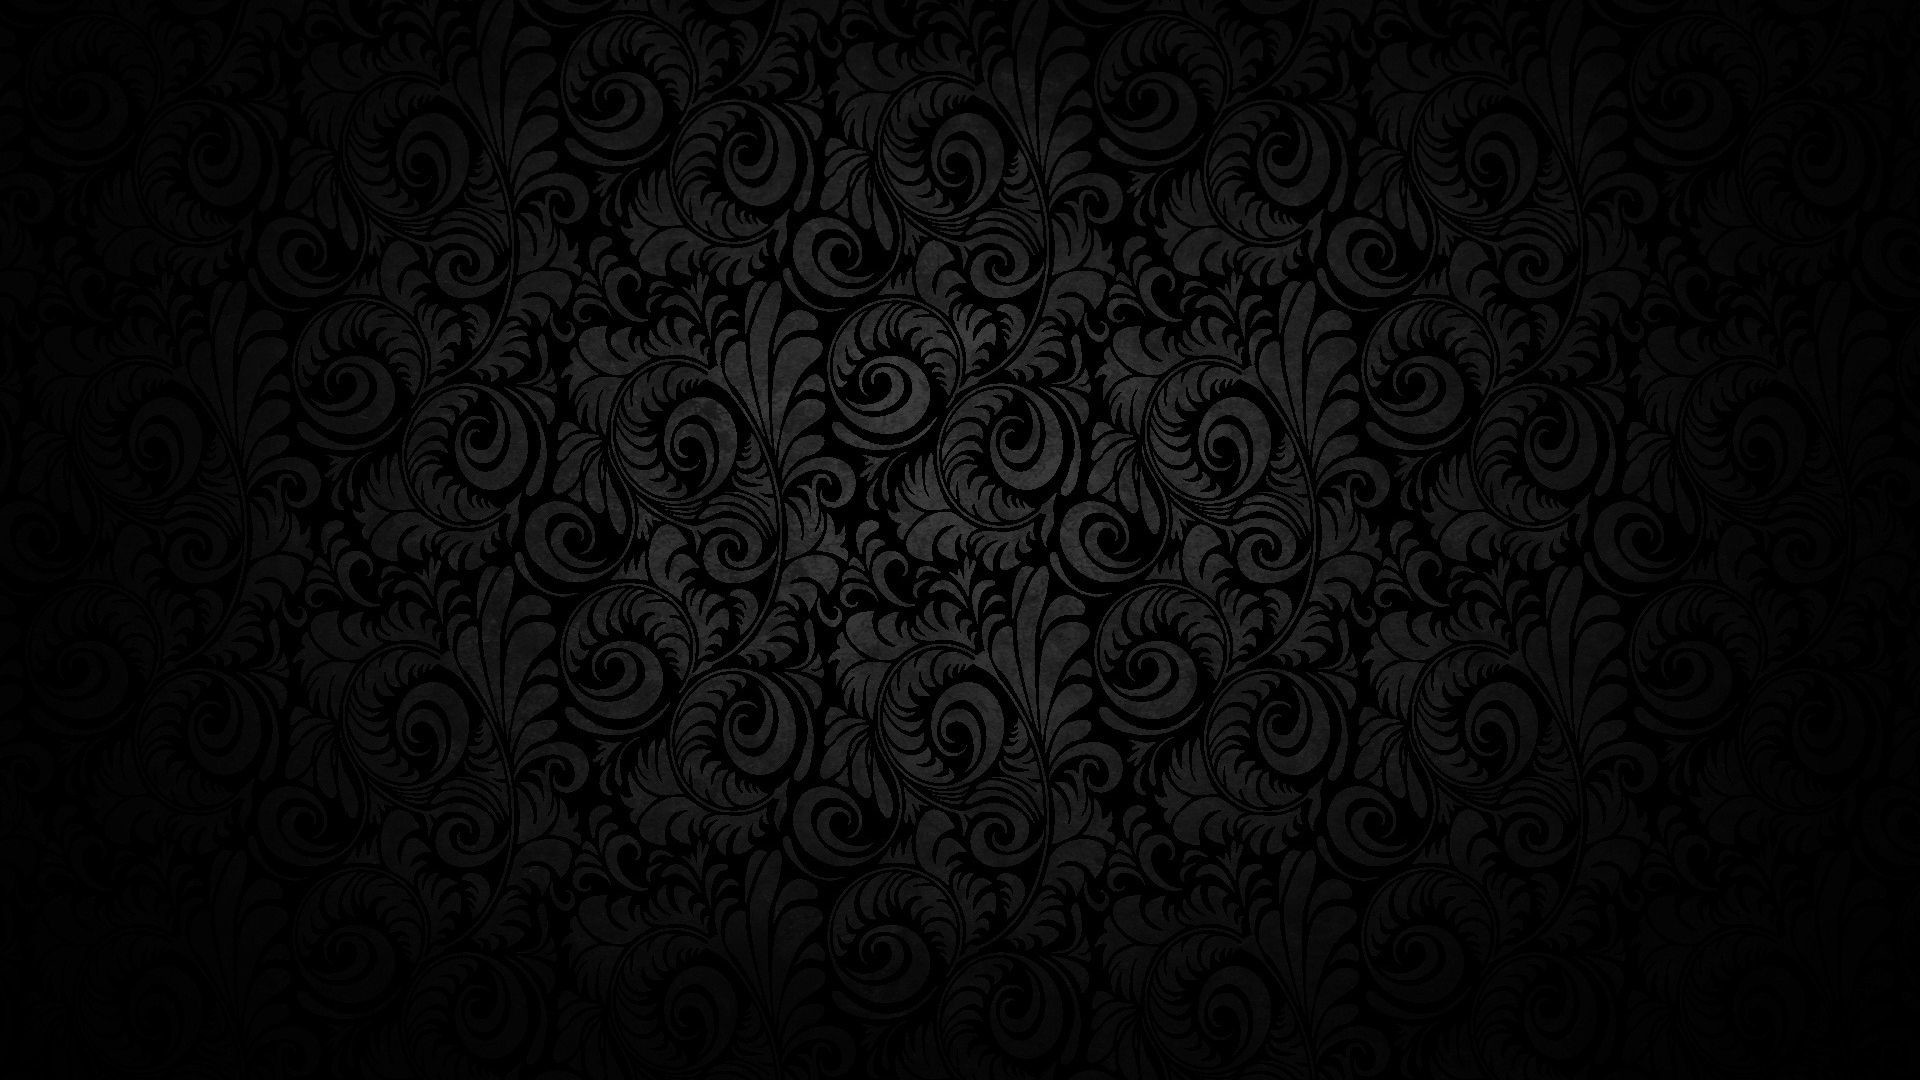 Dark Hd Wallpapers 1080p 68 Images